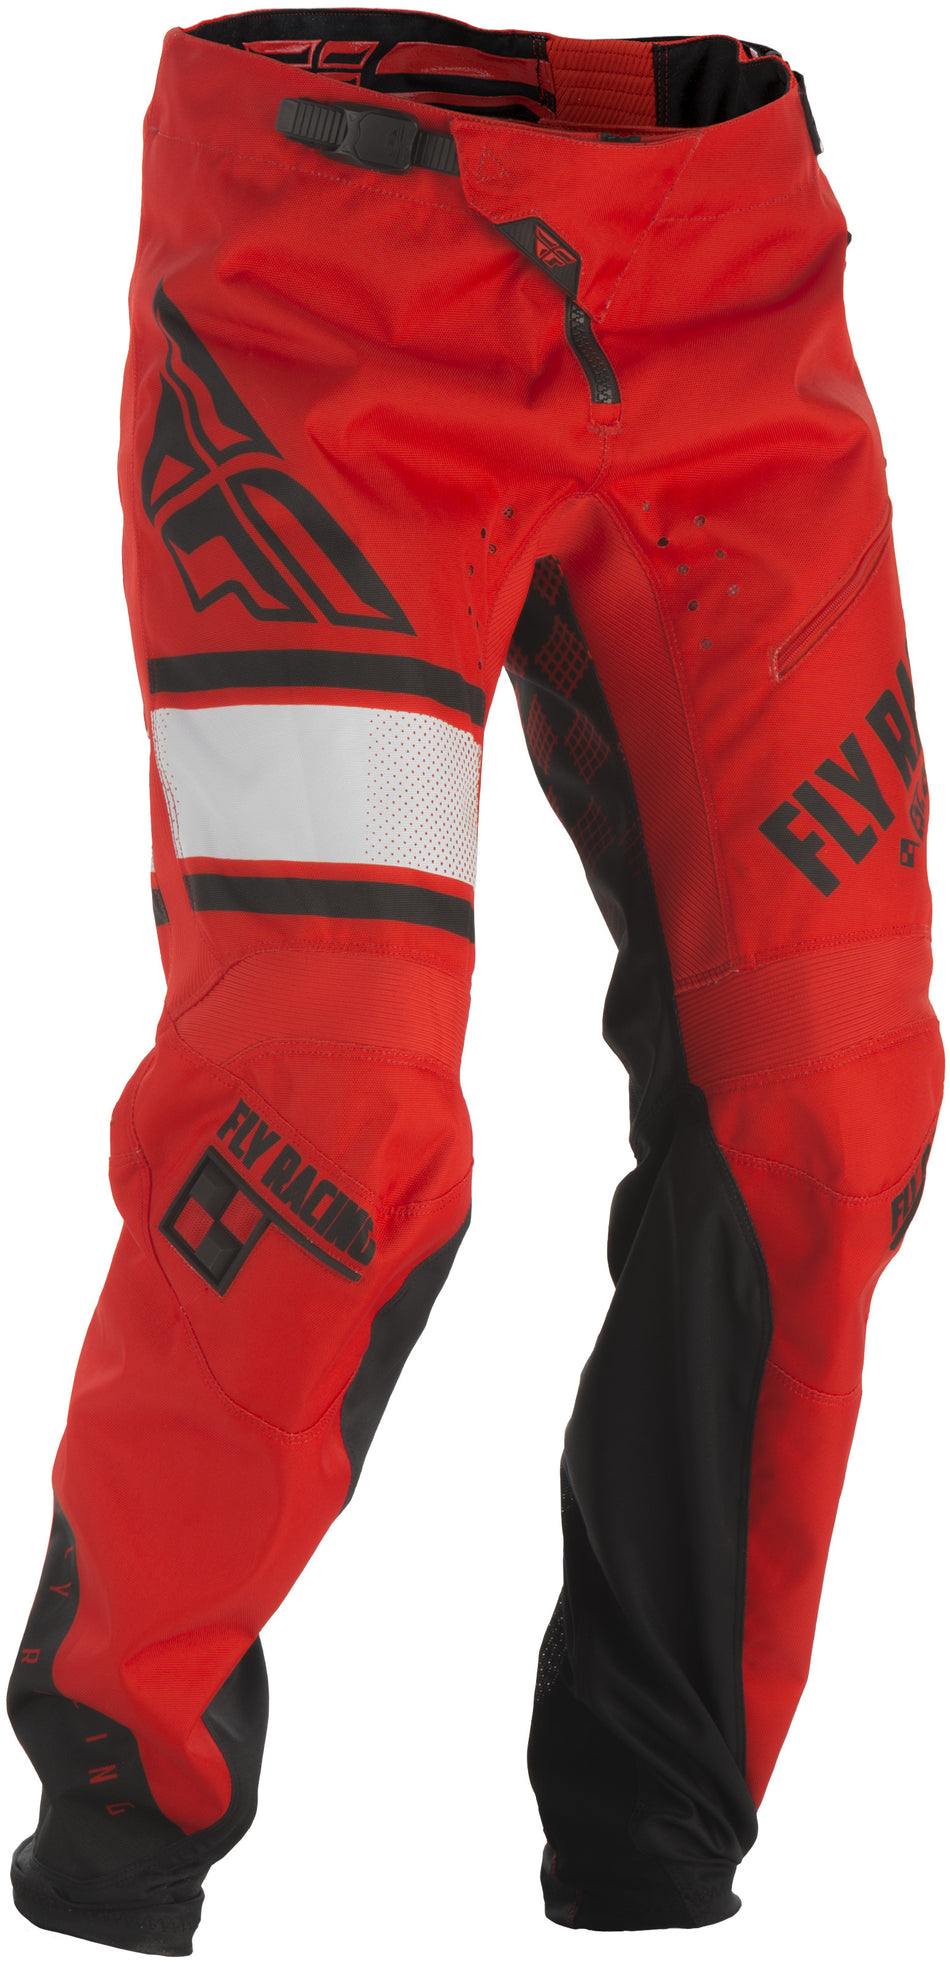 FLY RACING Kinetic Era Bicycle Pants Red/Black Sz 38 371-02238